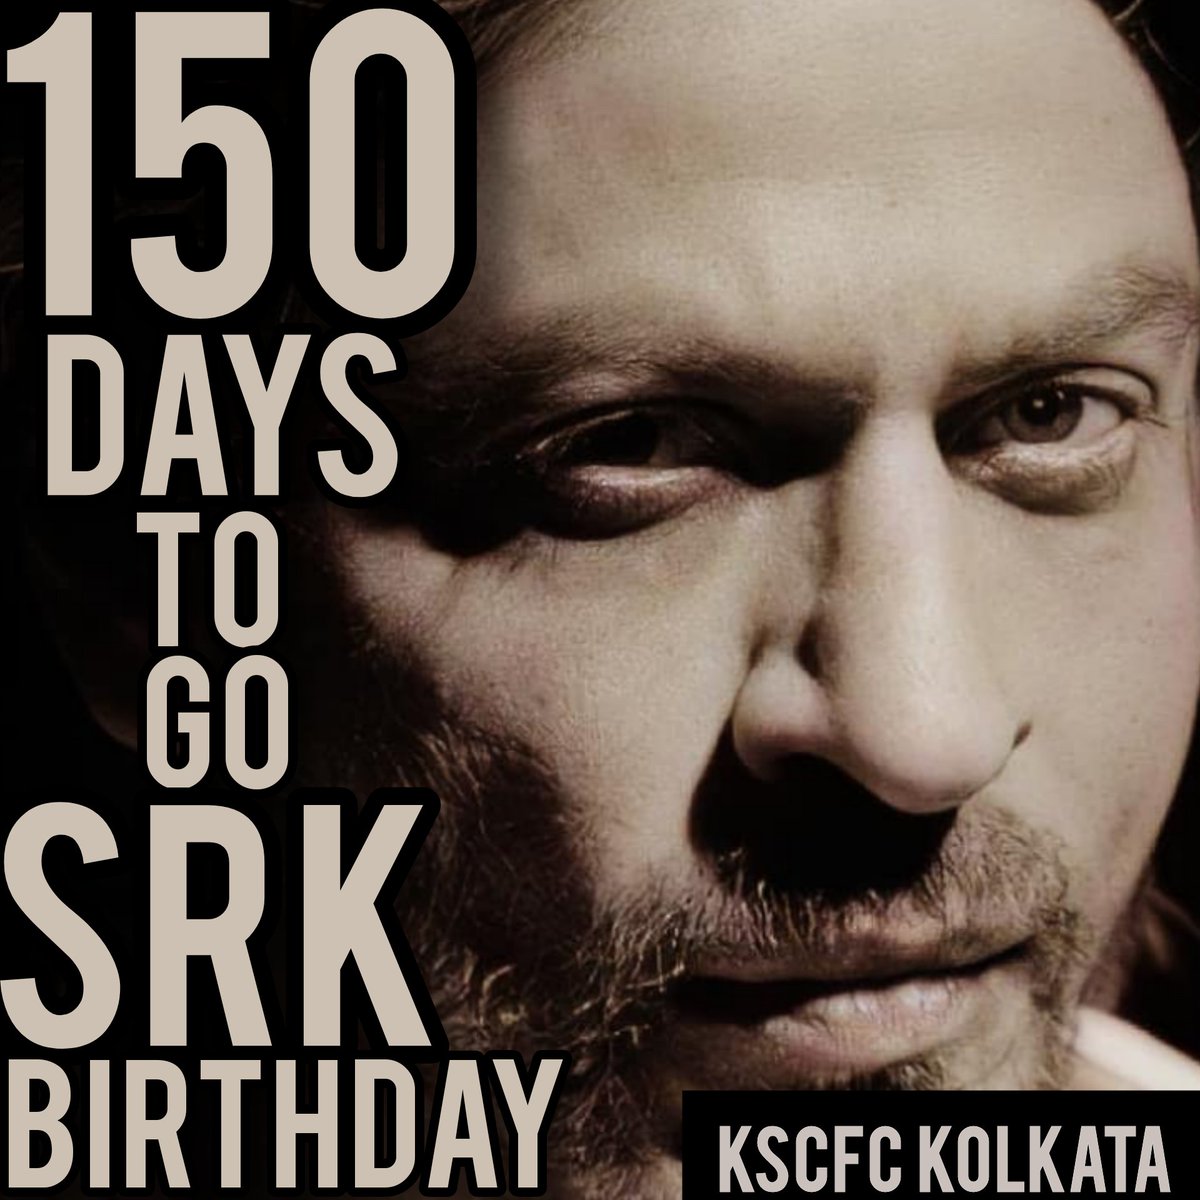 COUNTDOWN IS ON JUST 150 DAYS TO GO FOR ARK DAY SRK BUS SRK @iamsrk @kolkata_srk @KarunaBadwal @RedChilliesEnt @pooja_dadlani @khyatimadaan @BilalS158 #AskSRK #kingkhan #ShahRukhKhan𓀠 #myntra #jawanteaser #srk